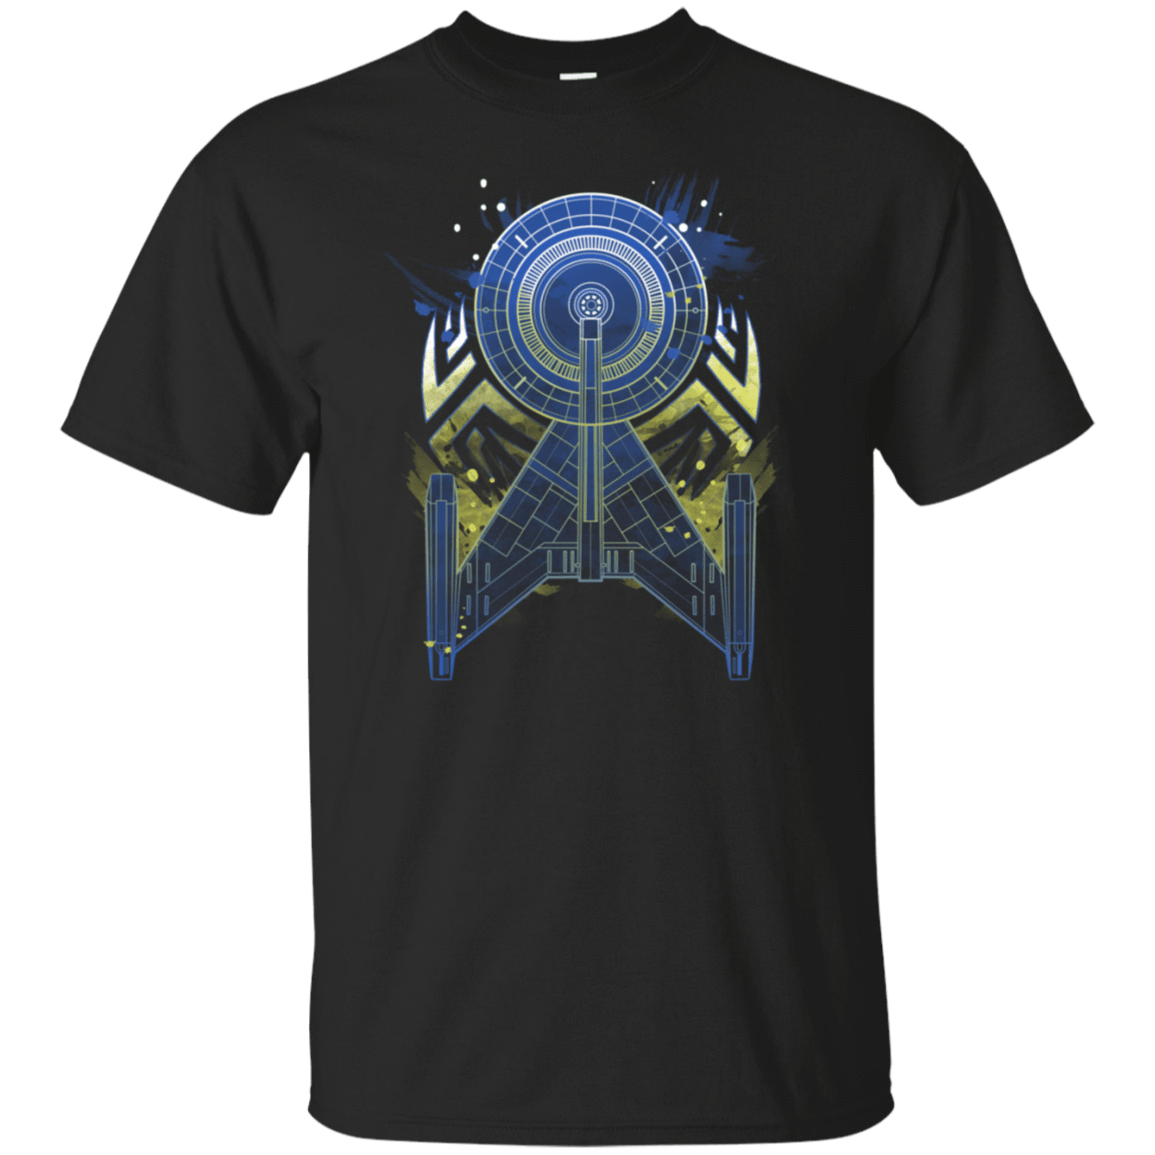 T-Shirts Black / S The Spaceship T-Shirt